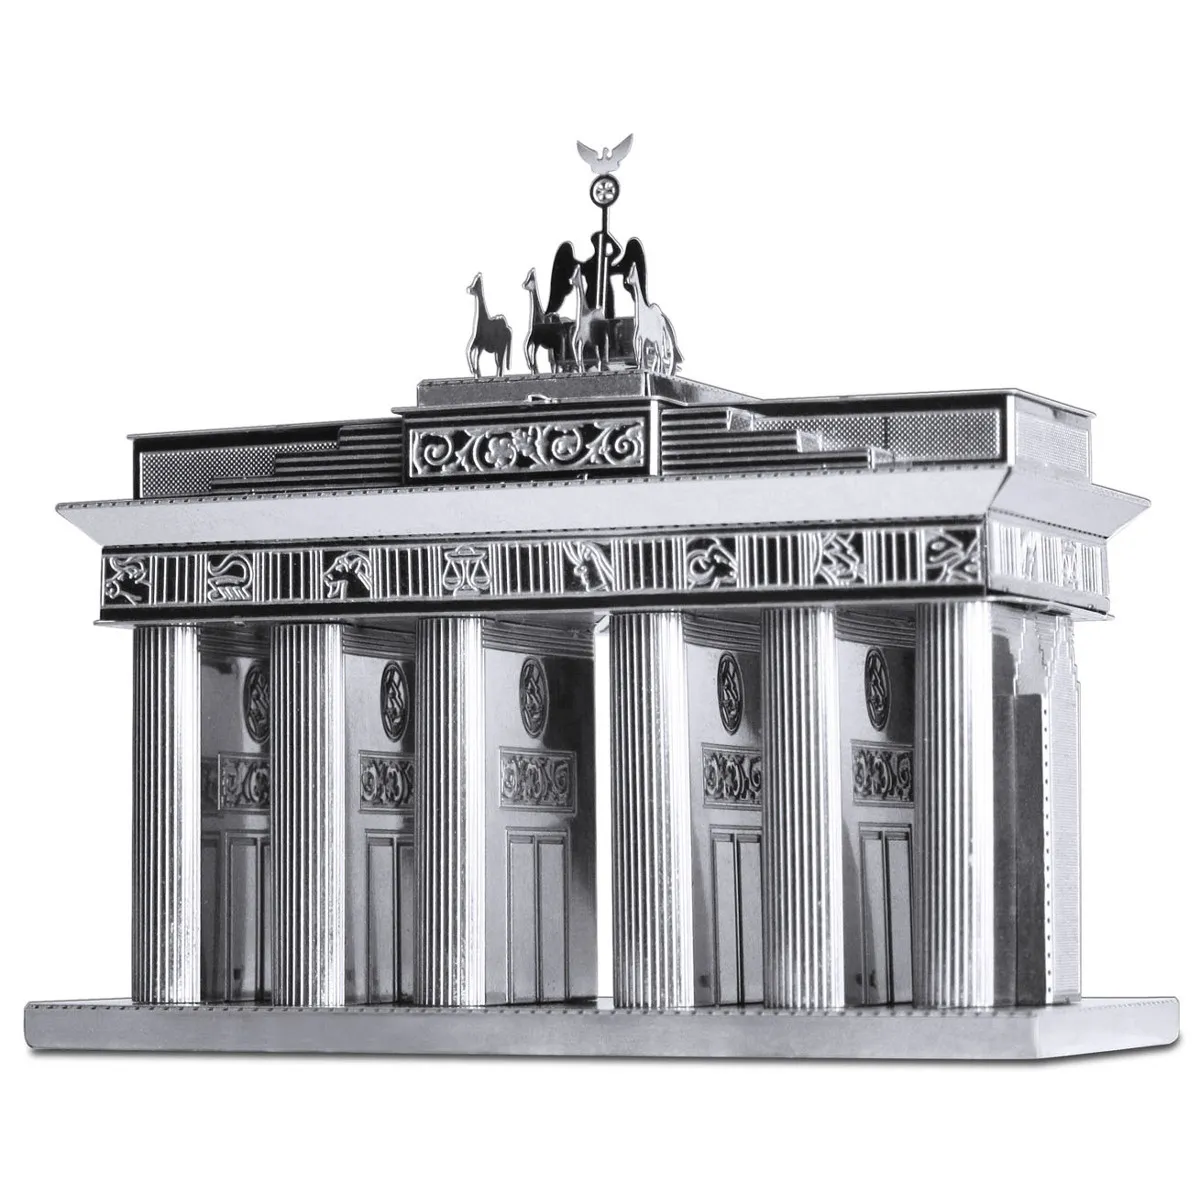 3D Metallbausatz berühmte Gebäude - Brandenburger Tor